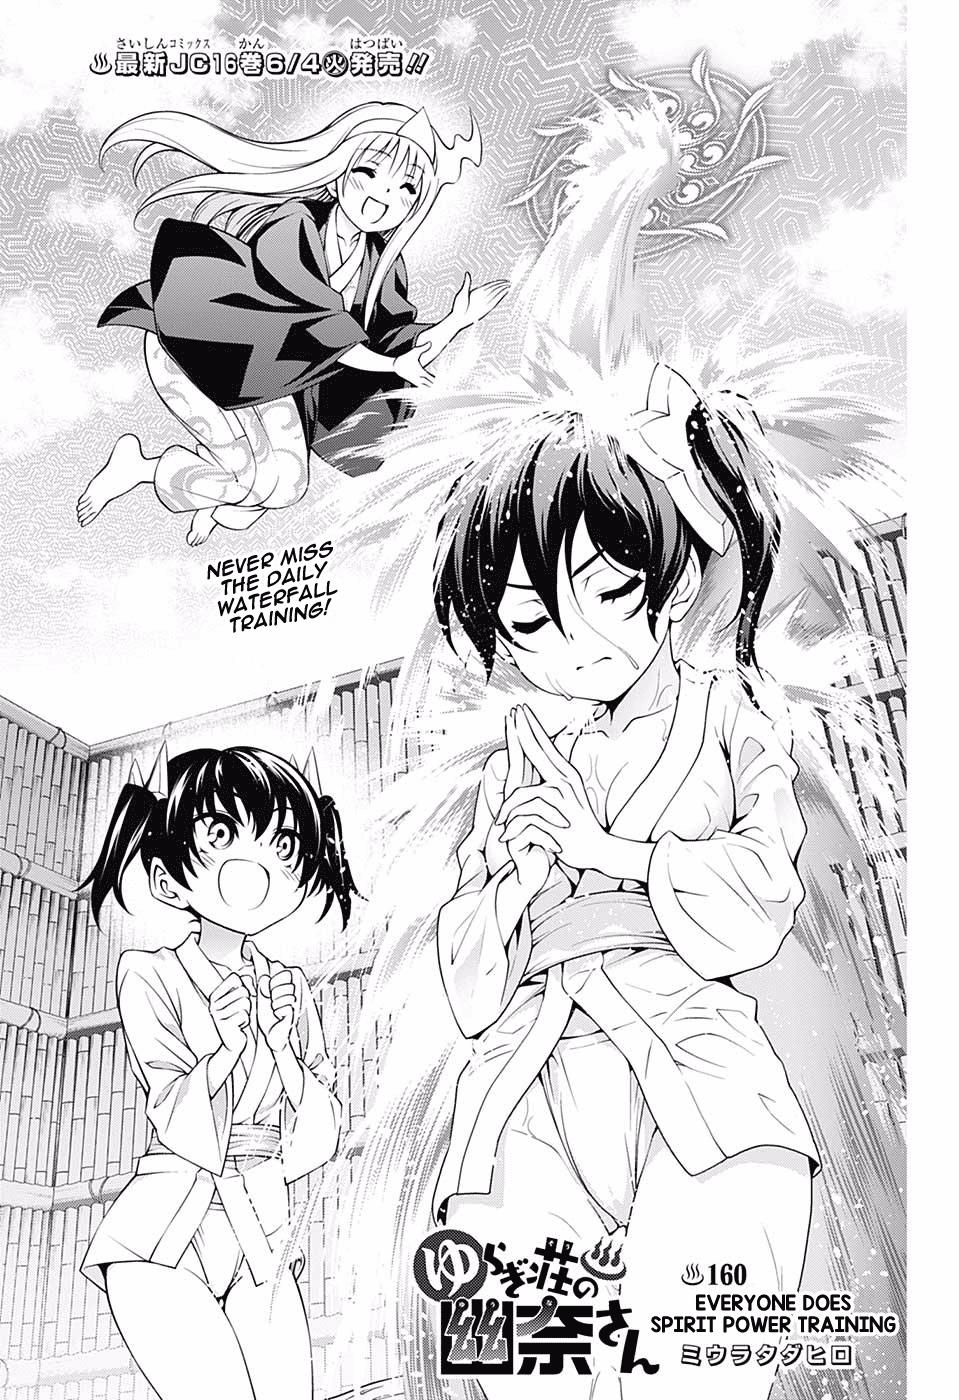 Read Yuragi-Sou No Yuuna-San Vol.18 Chapter 158: The Main Tenko Family And  The Yuragi Inn on Mangakakalot